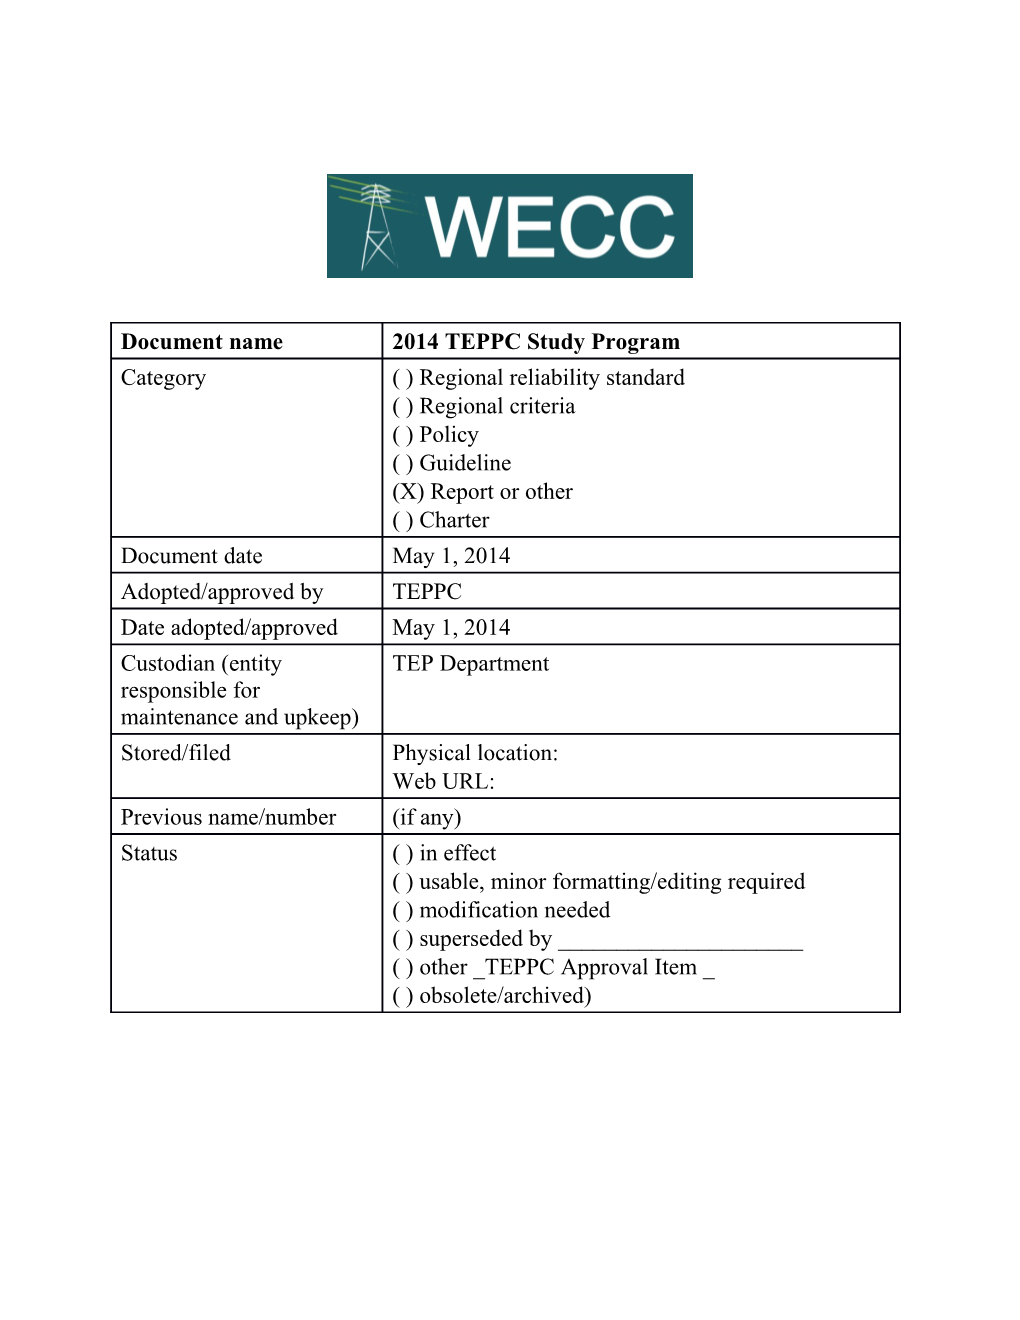 TEPPC 2014 Study Program